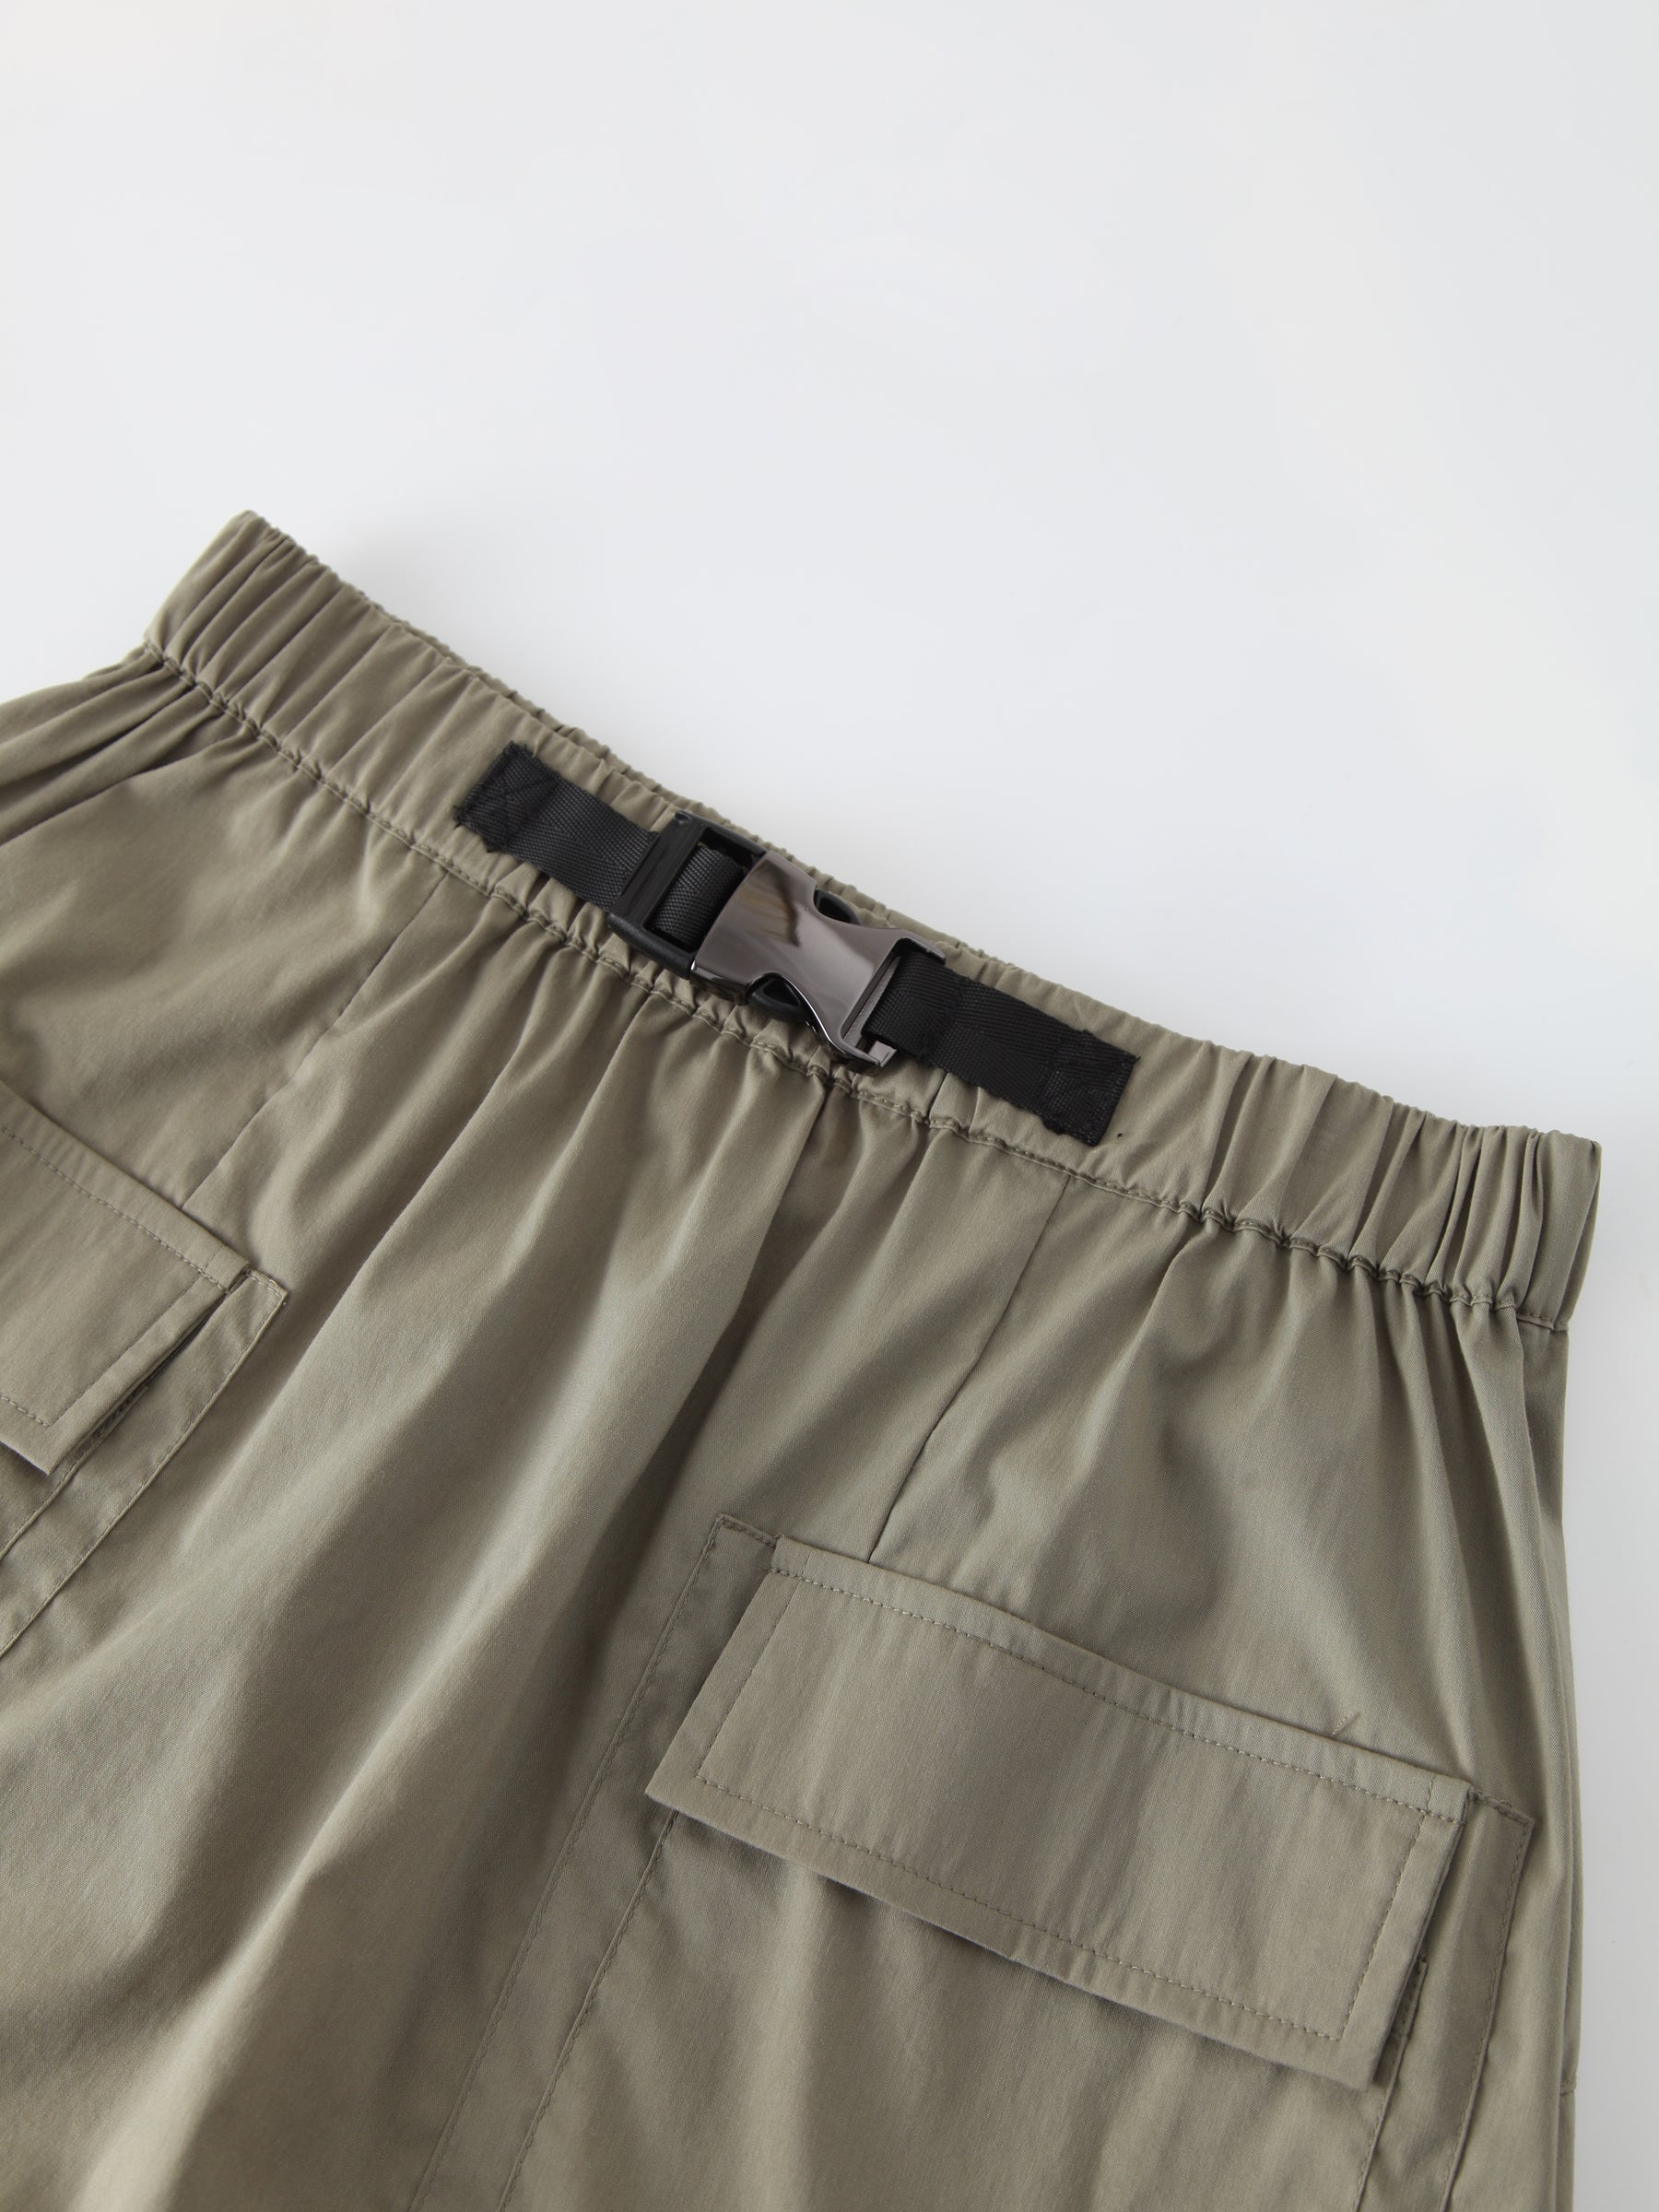 Buckle Cargo Skirt-Olive Green